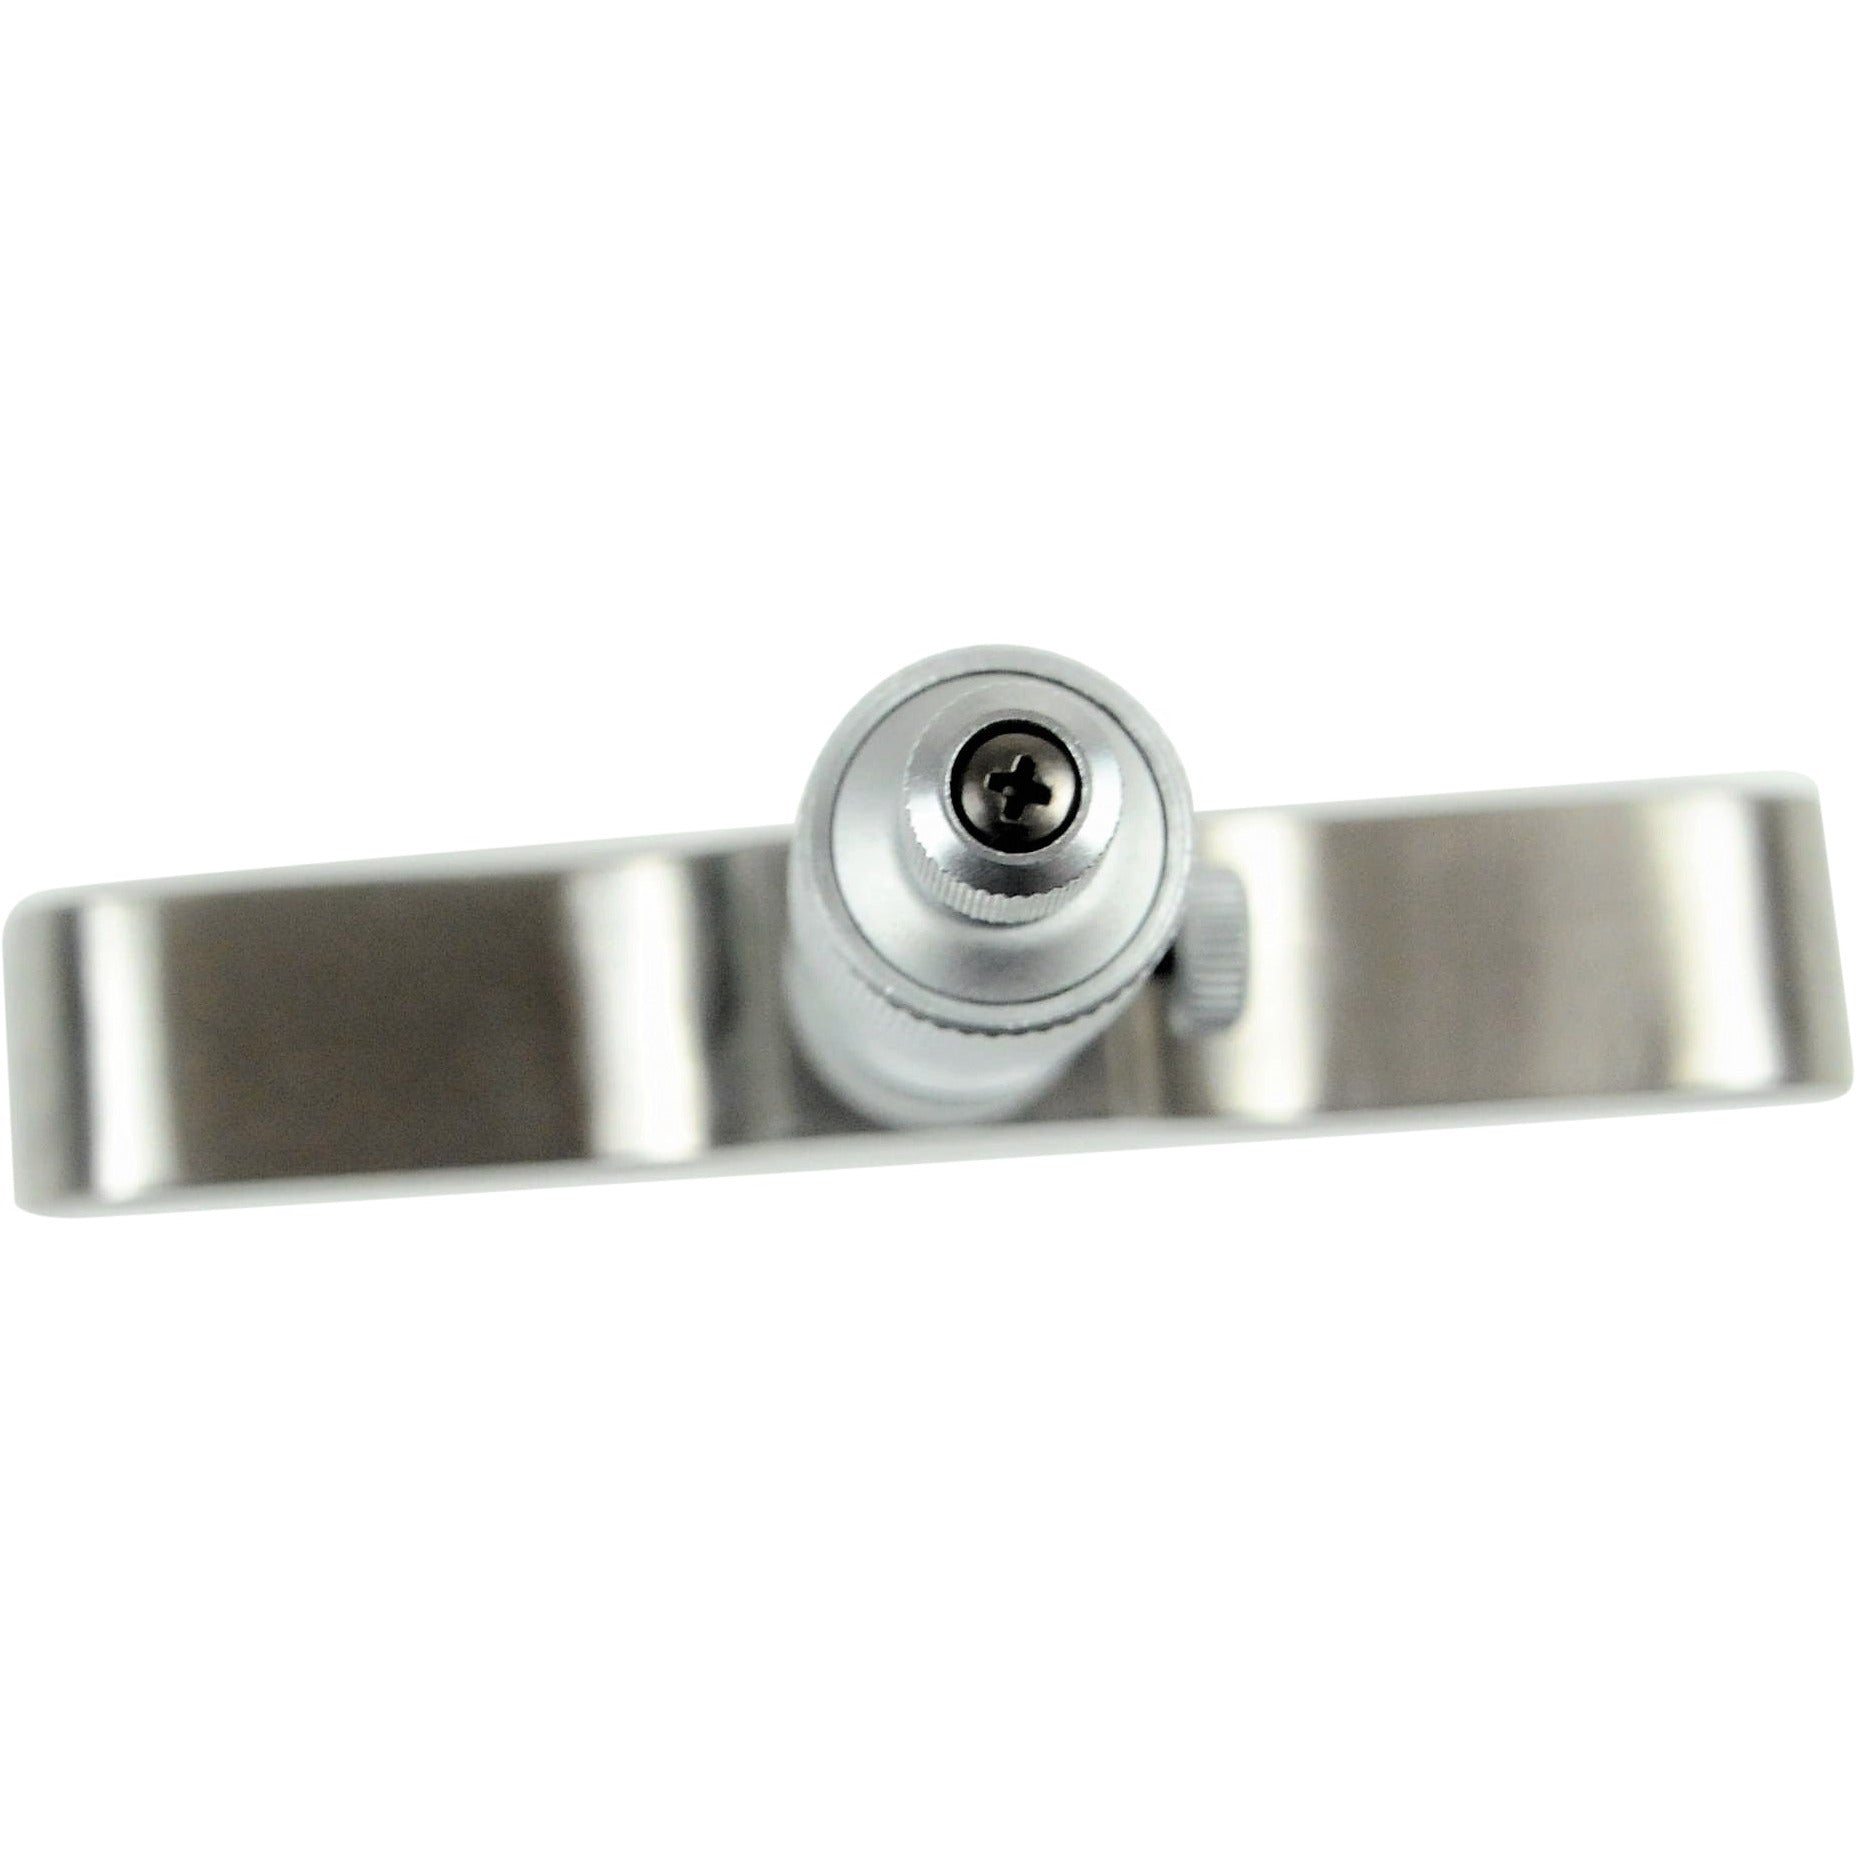 Insize Imperial Depth Micrometer 0-150mm Range Series 3240 - 150